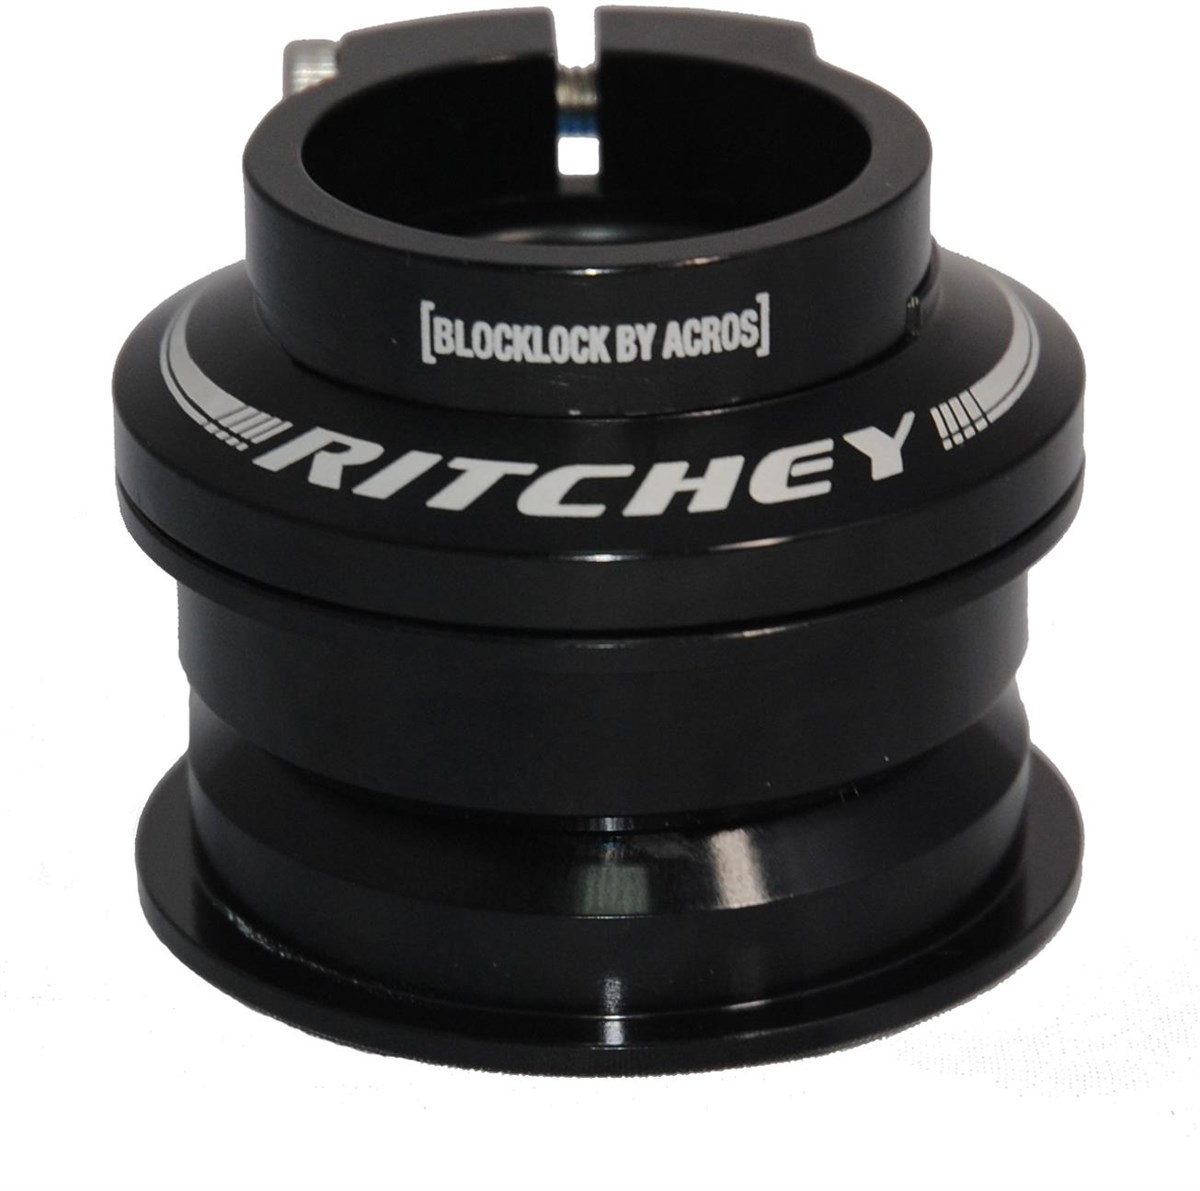 Ritchey Pro Press Fit Blocklock Headset product image